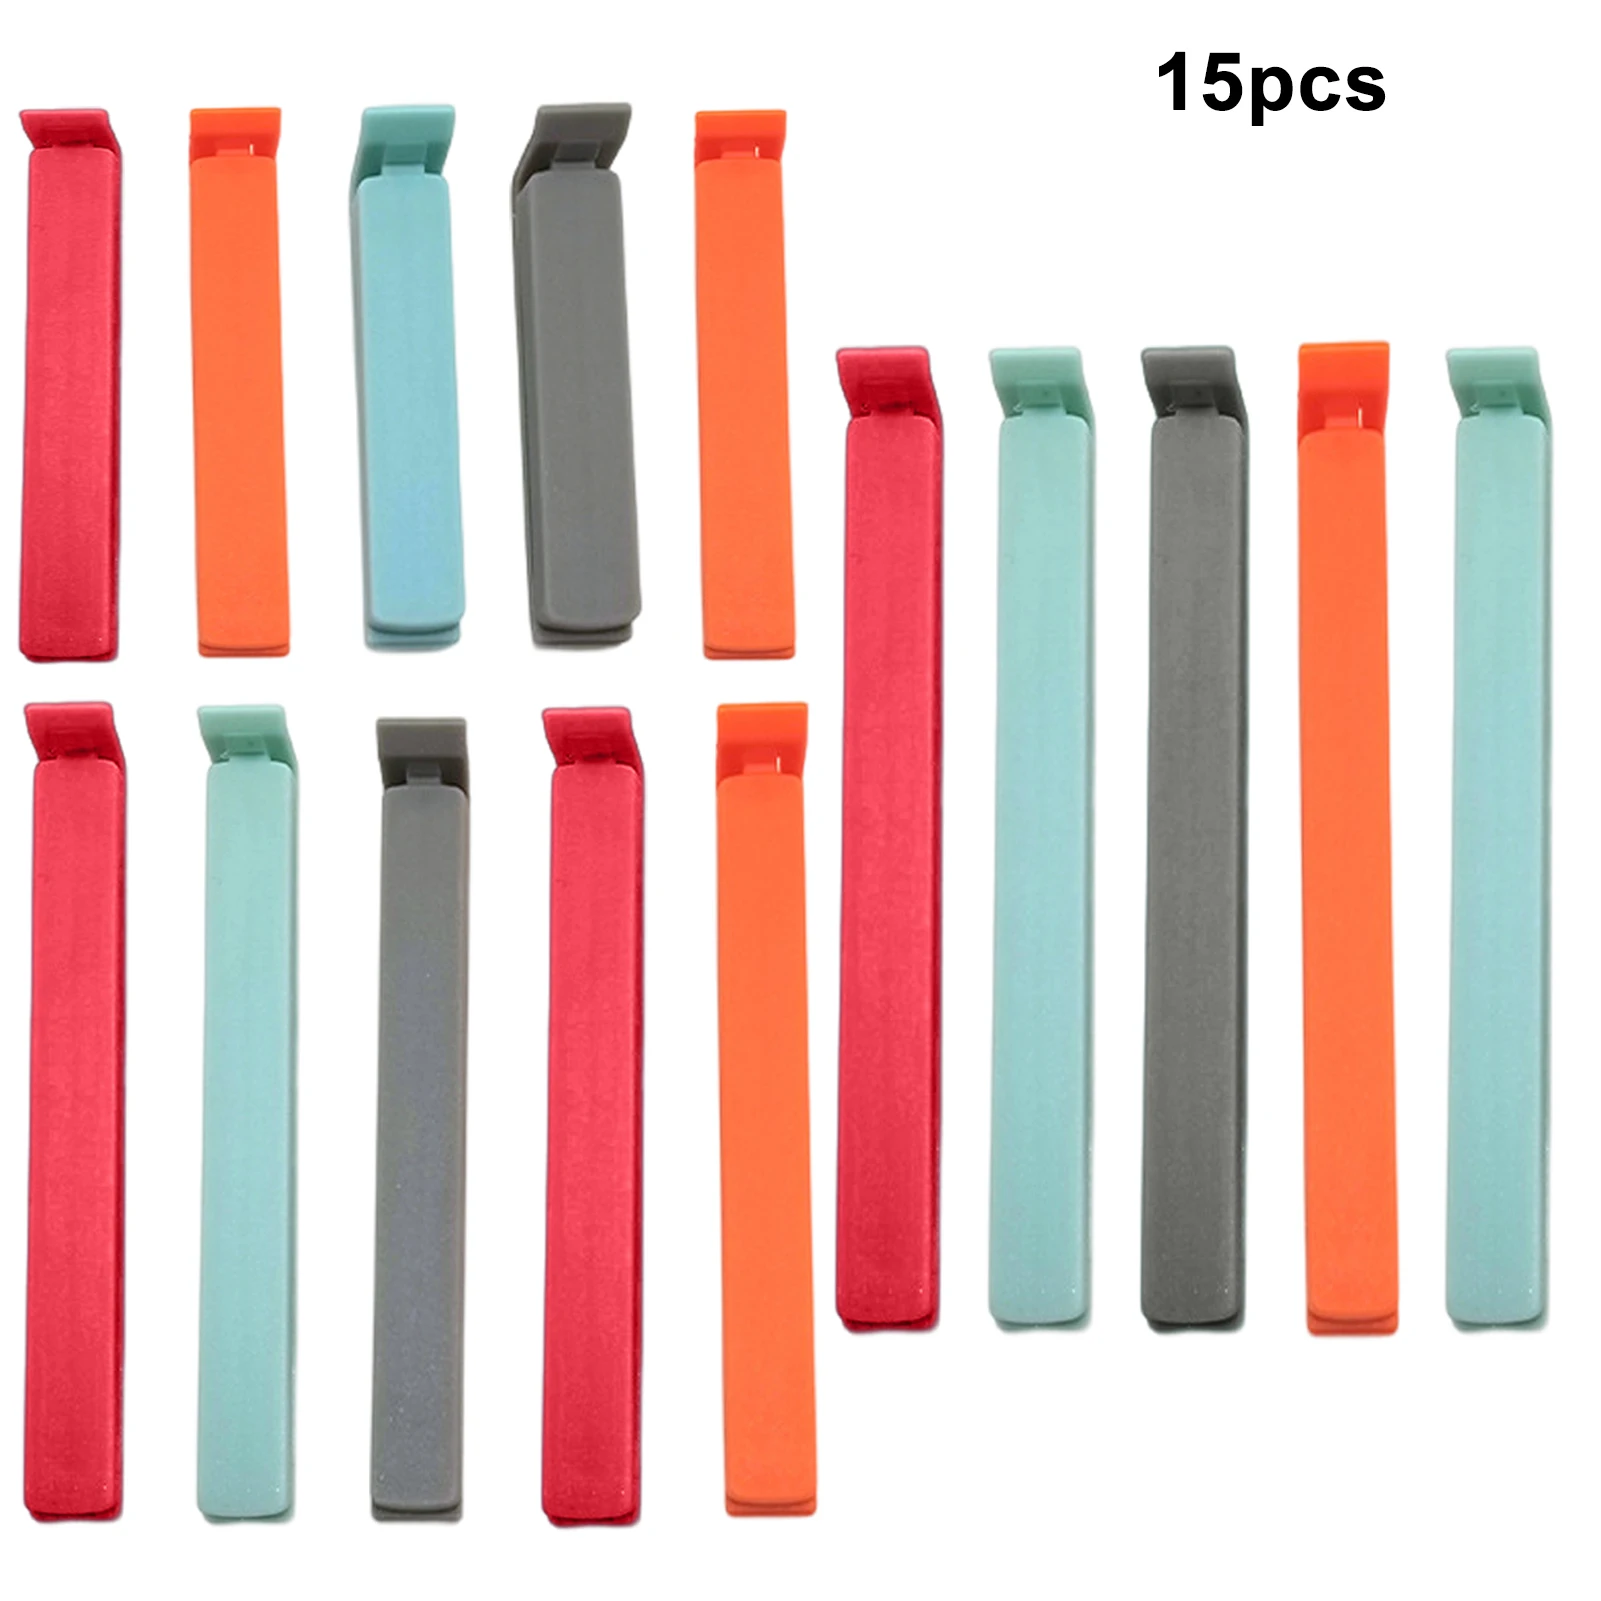 

15pcs Random Color Candy Convenient Plastic Freezer Bag Sealing Clip Universal Packing Snacks Travel Food Storage Assorted Sizes